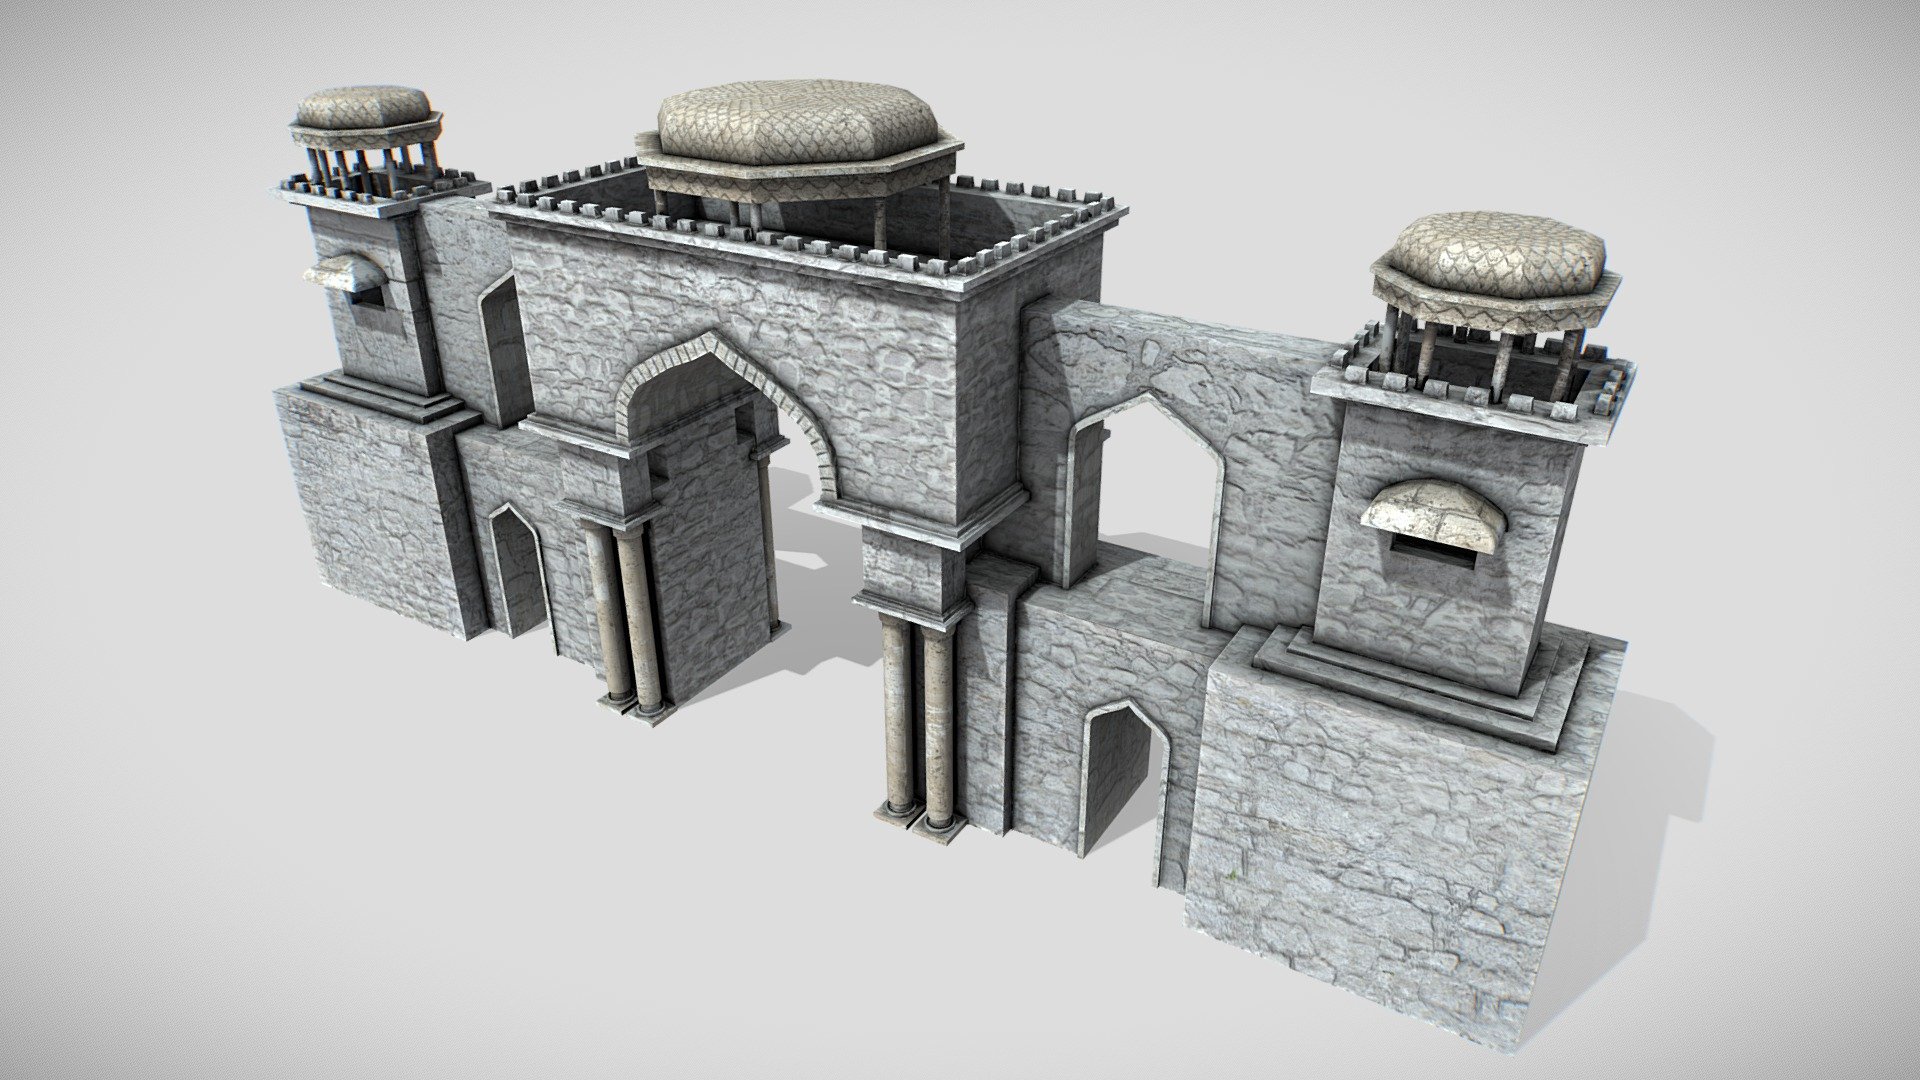 3d model of the asian city entrance - Asian City Entrance - 3D model by djkorg 3d model